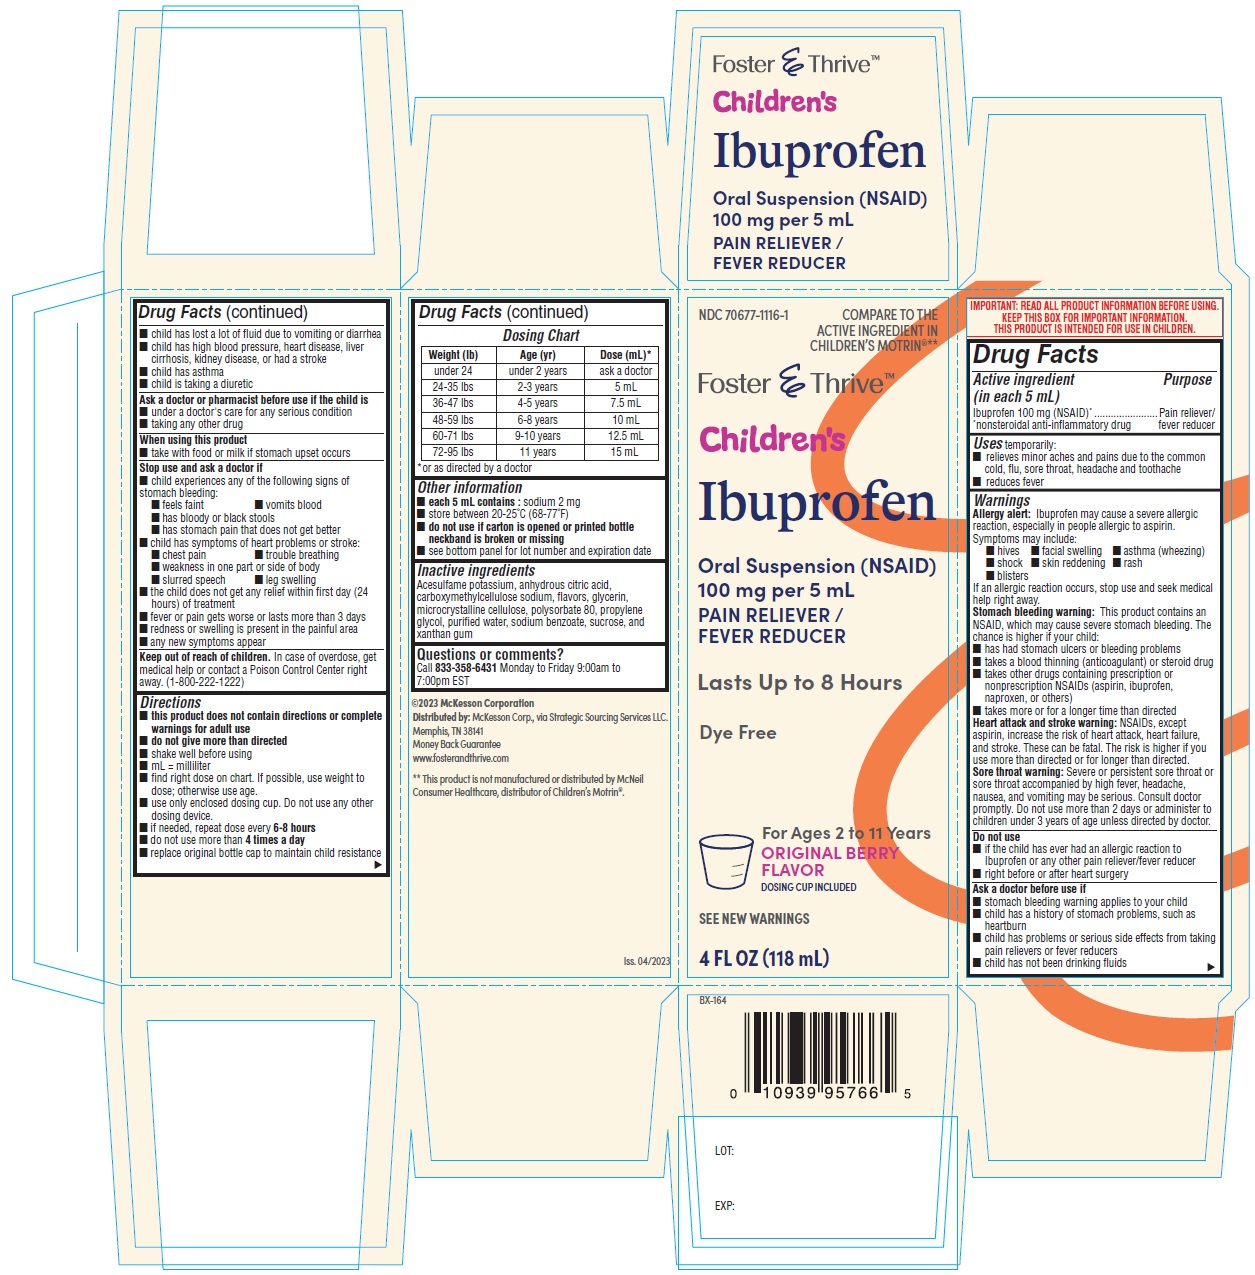 Ibuprofen oral suspension original berry flavor container carton